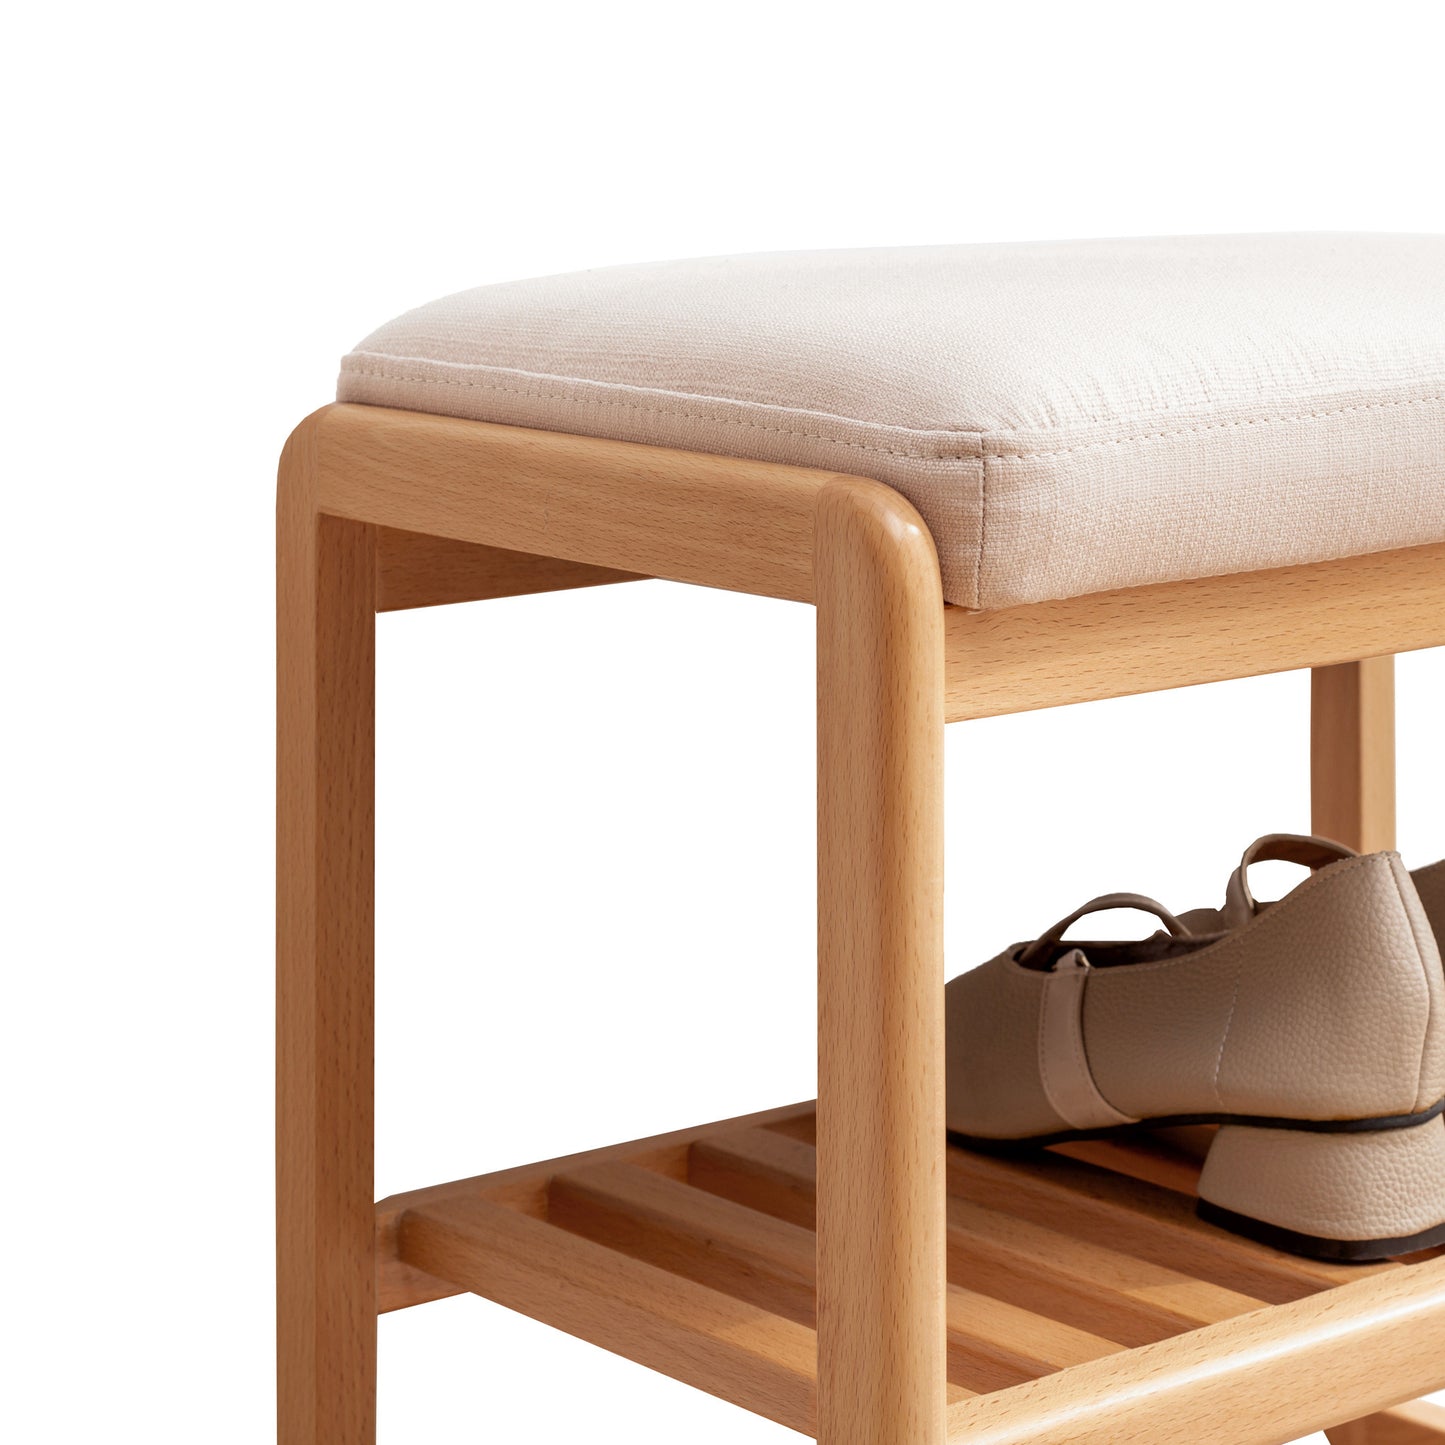 Natural Solid Wood Shoe Bench, Beech Wood Storage Rack Organizer with High Rebound Sponge Cushion